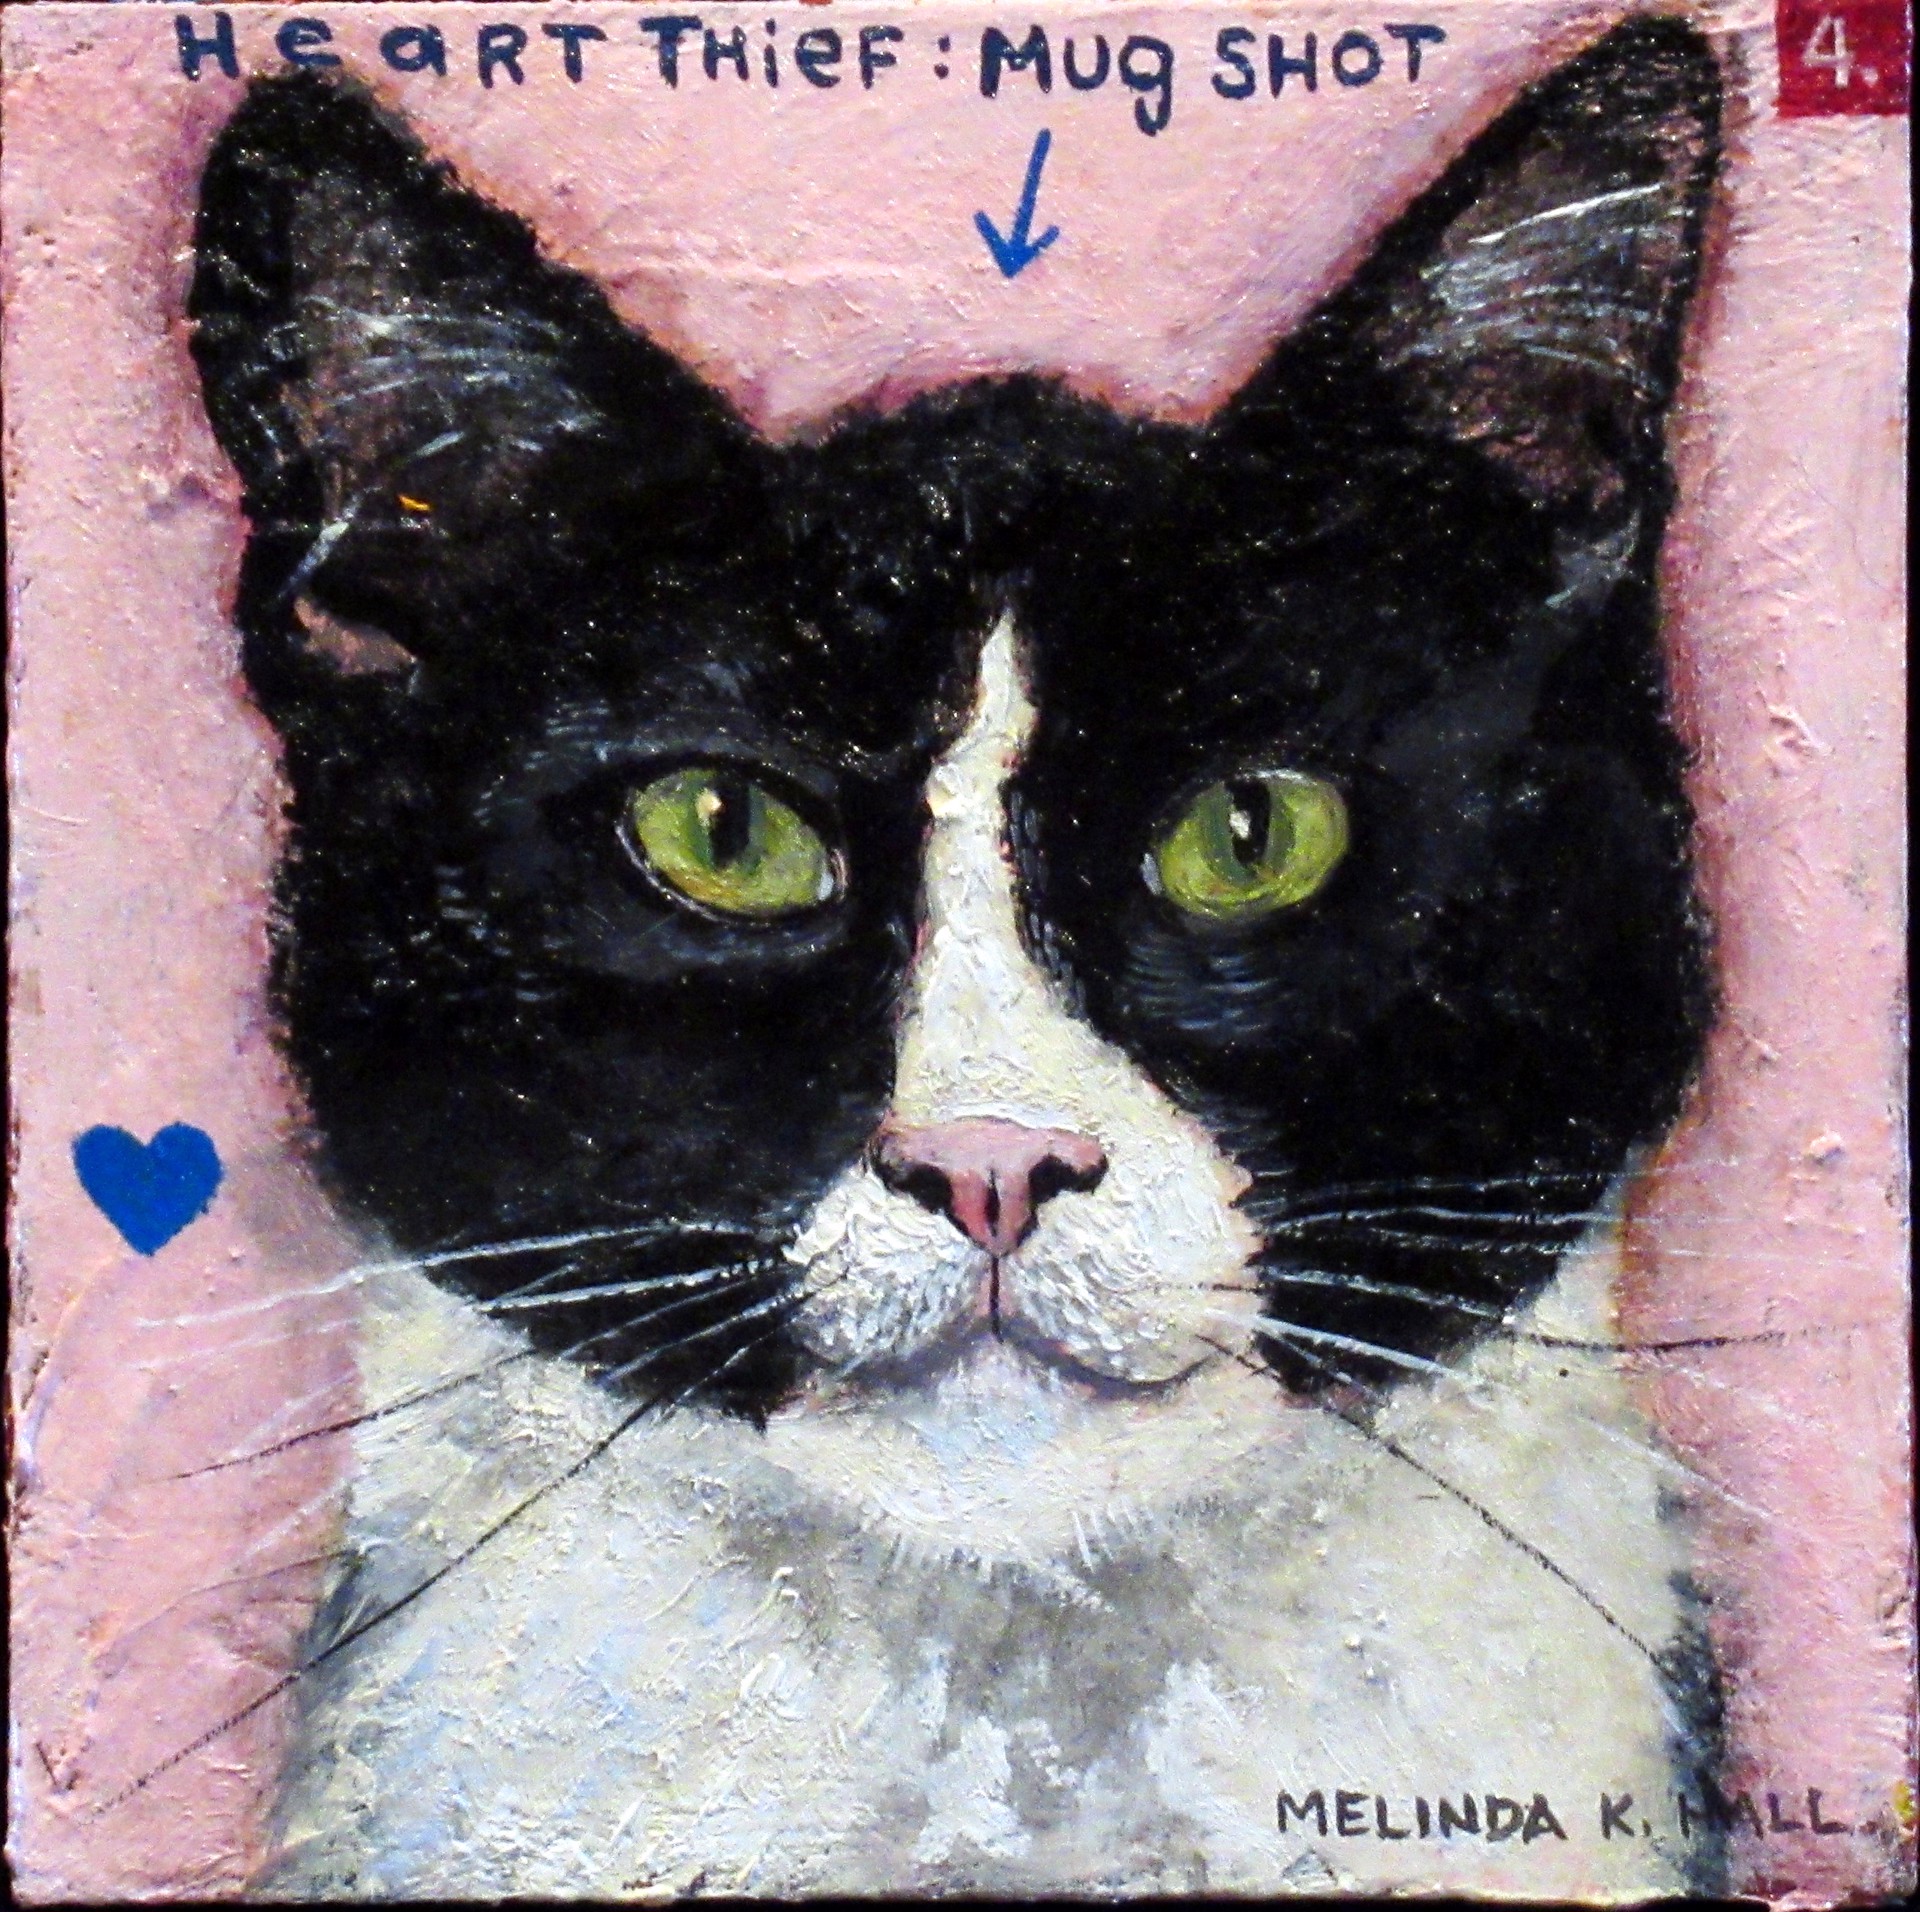 Heart Thief:  Mug Shot #4 by Melinda K. Hall